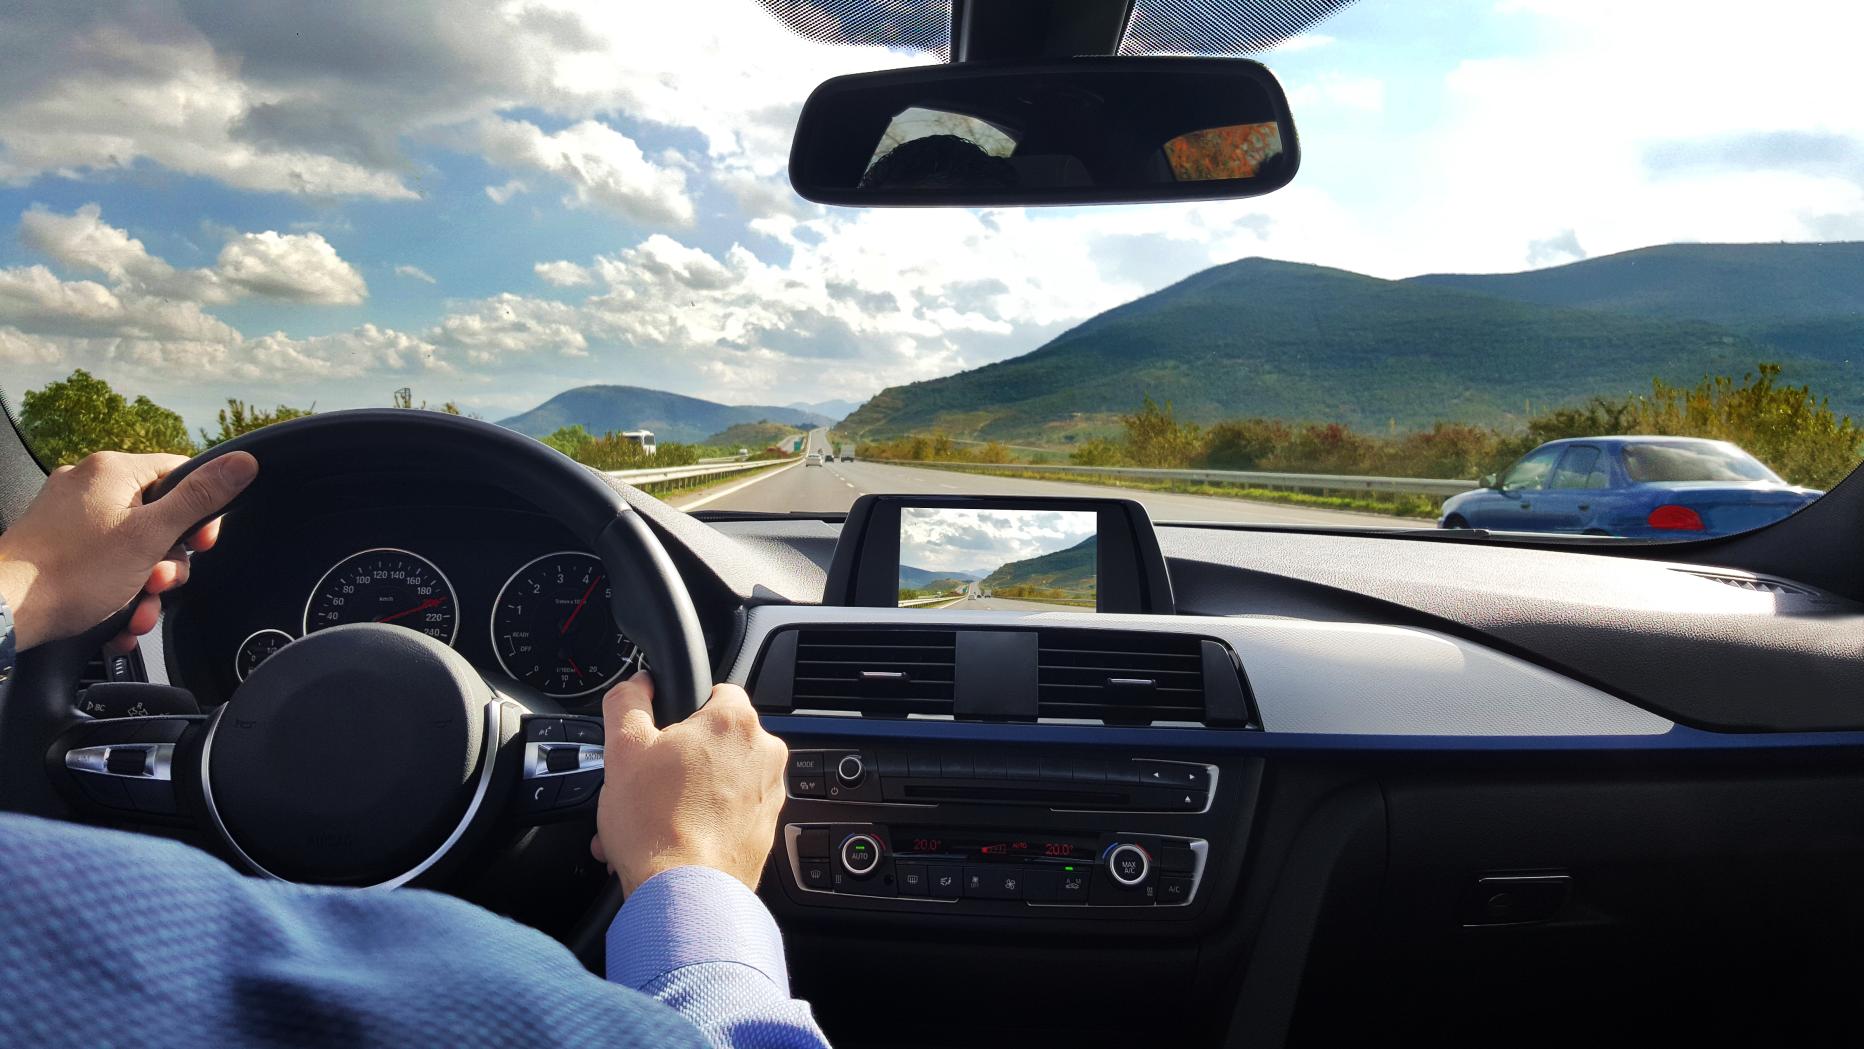 Car s outside. Car dashboard. Driving in my car АРК. Dashboard in car. Tesla Driving perspective.